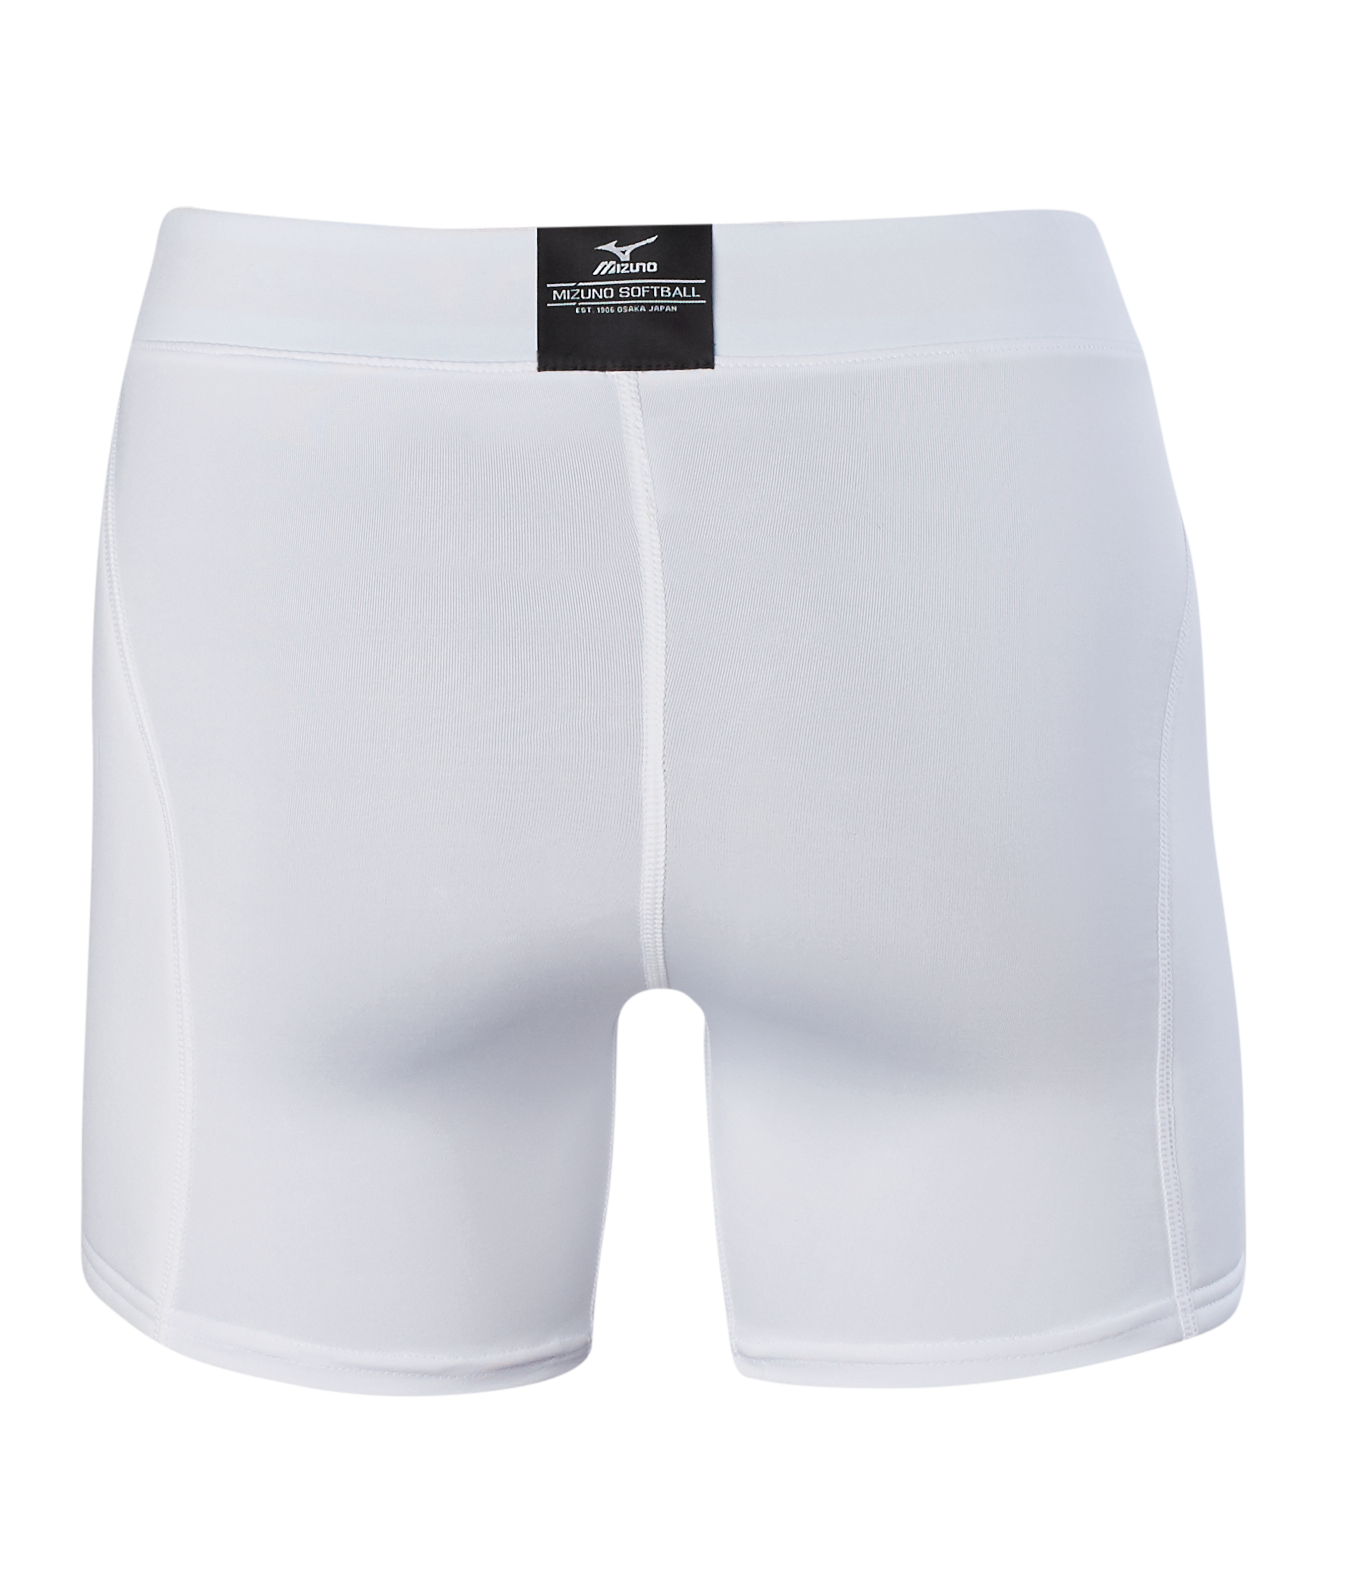 mizuno sliding shorts size chart